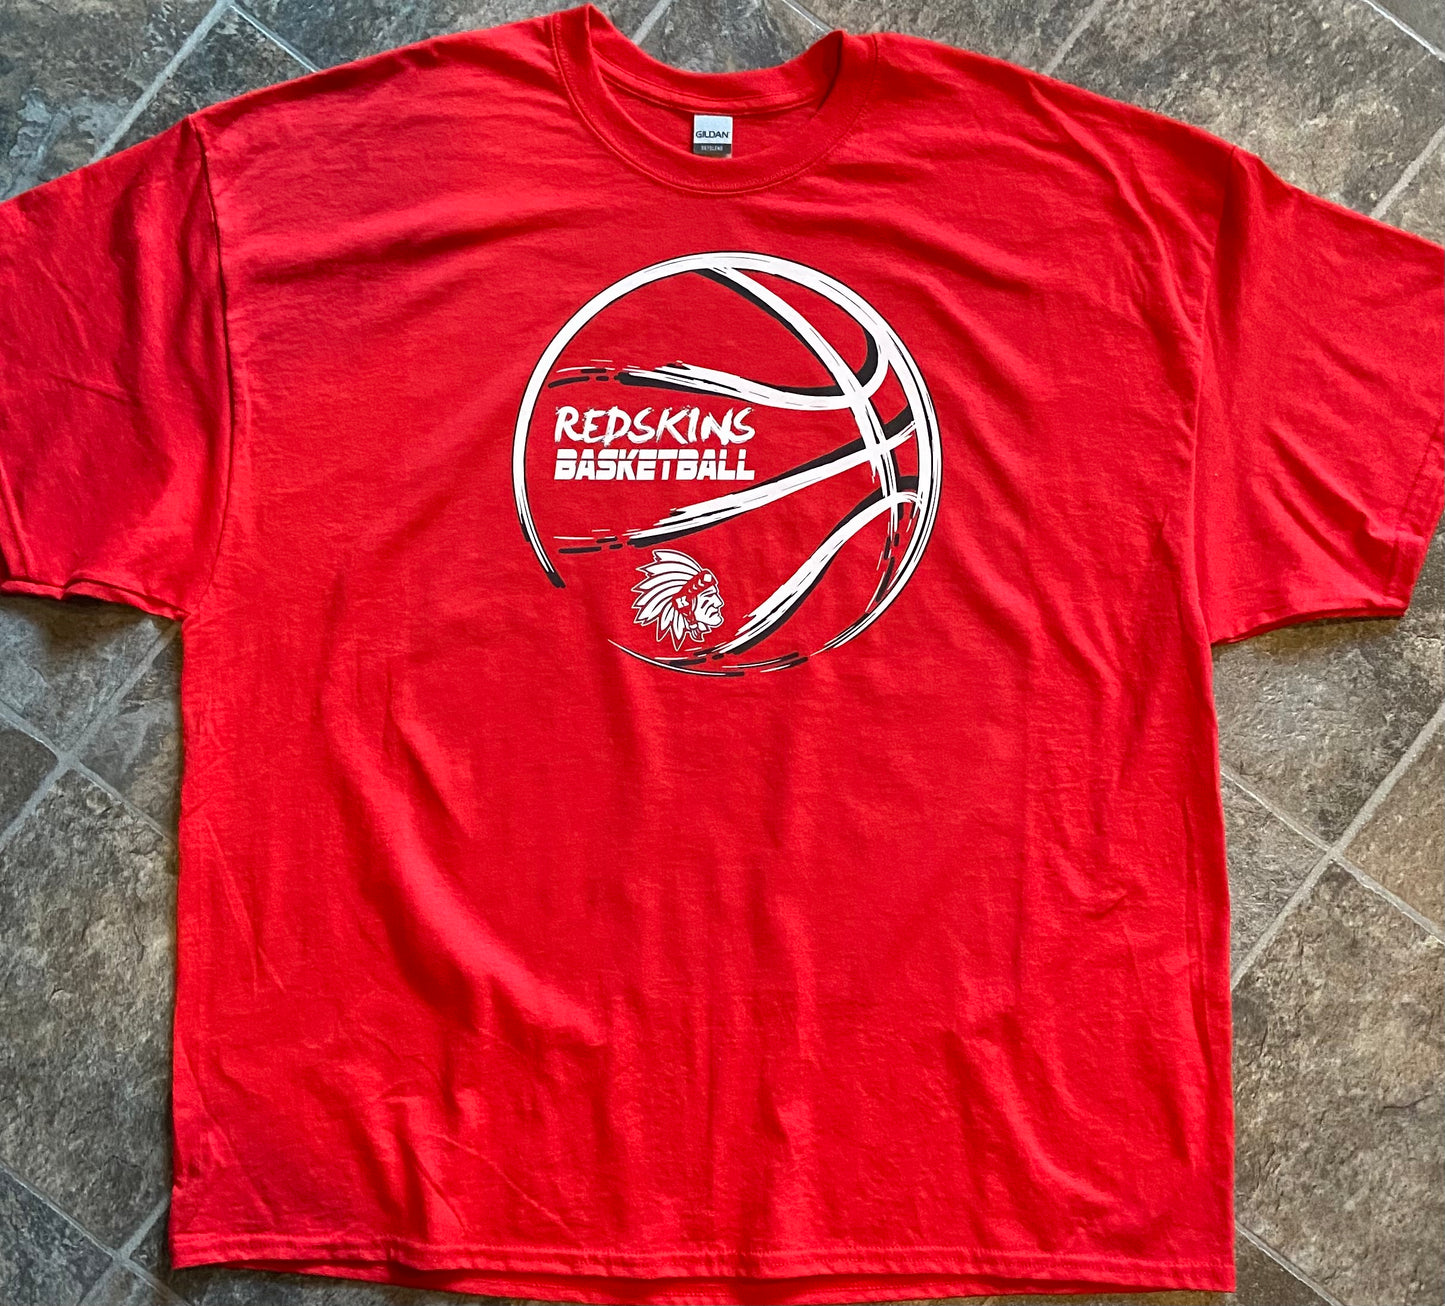 Knox Redskins Basketball Shirt Adult and Youth Sizes - Tomahawk Custom Design